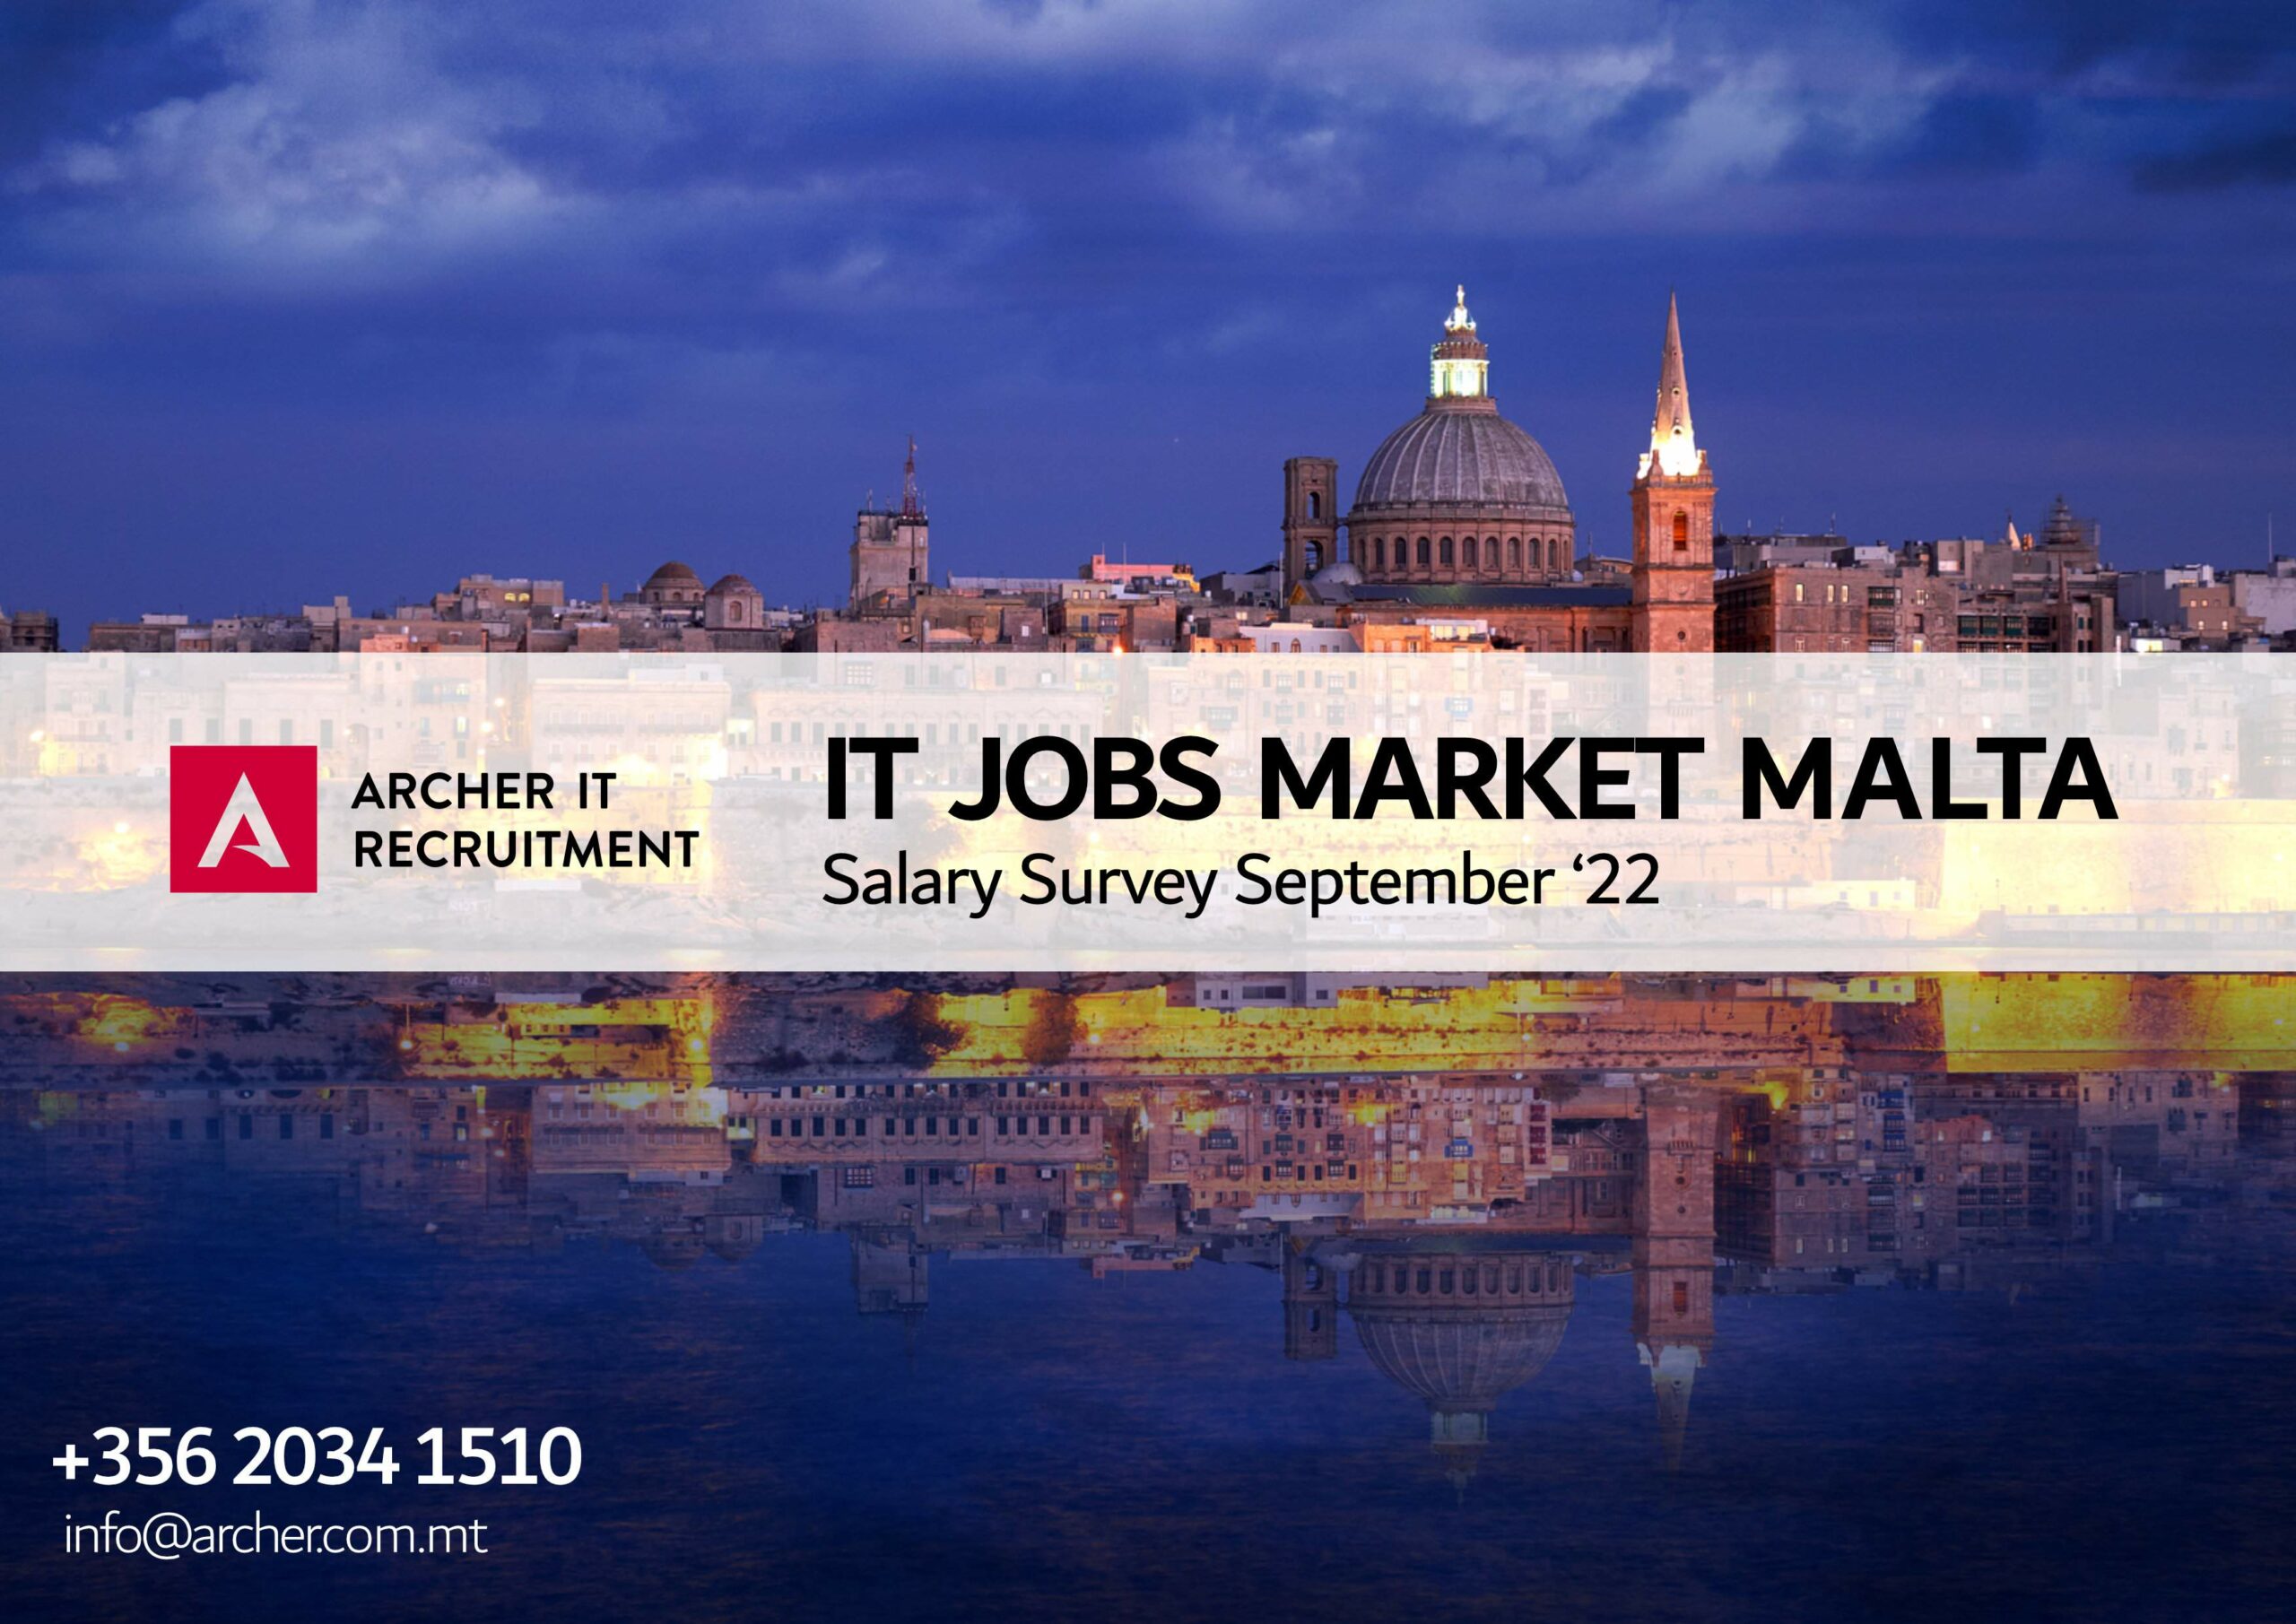 Archer IT Recruitment Salary Survey Malta September 2022